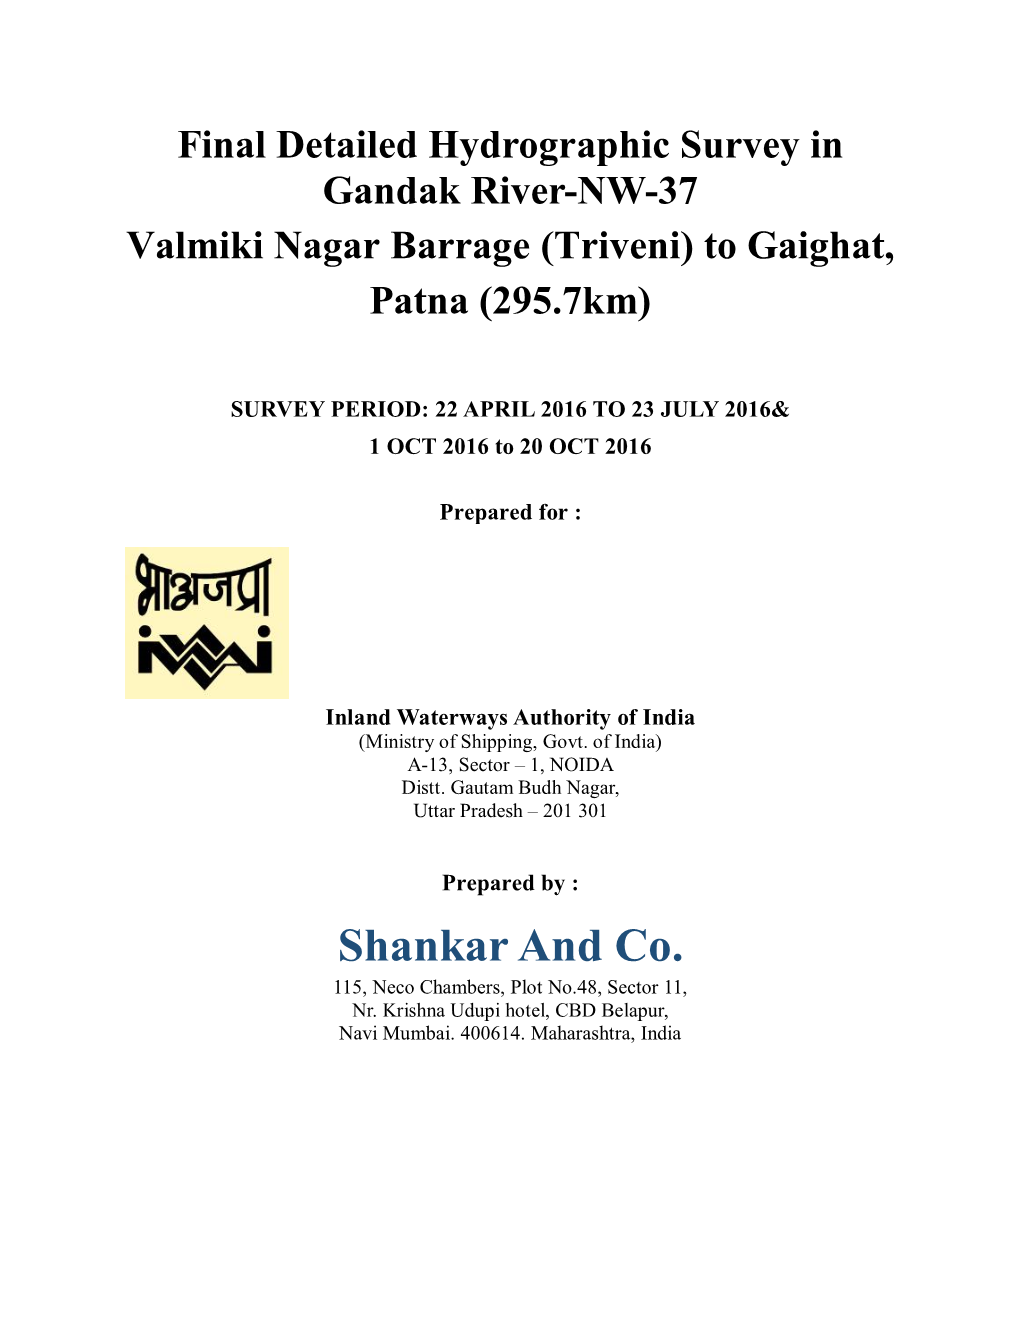 NW-37 Gandak River Final Hy